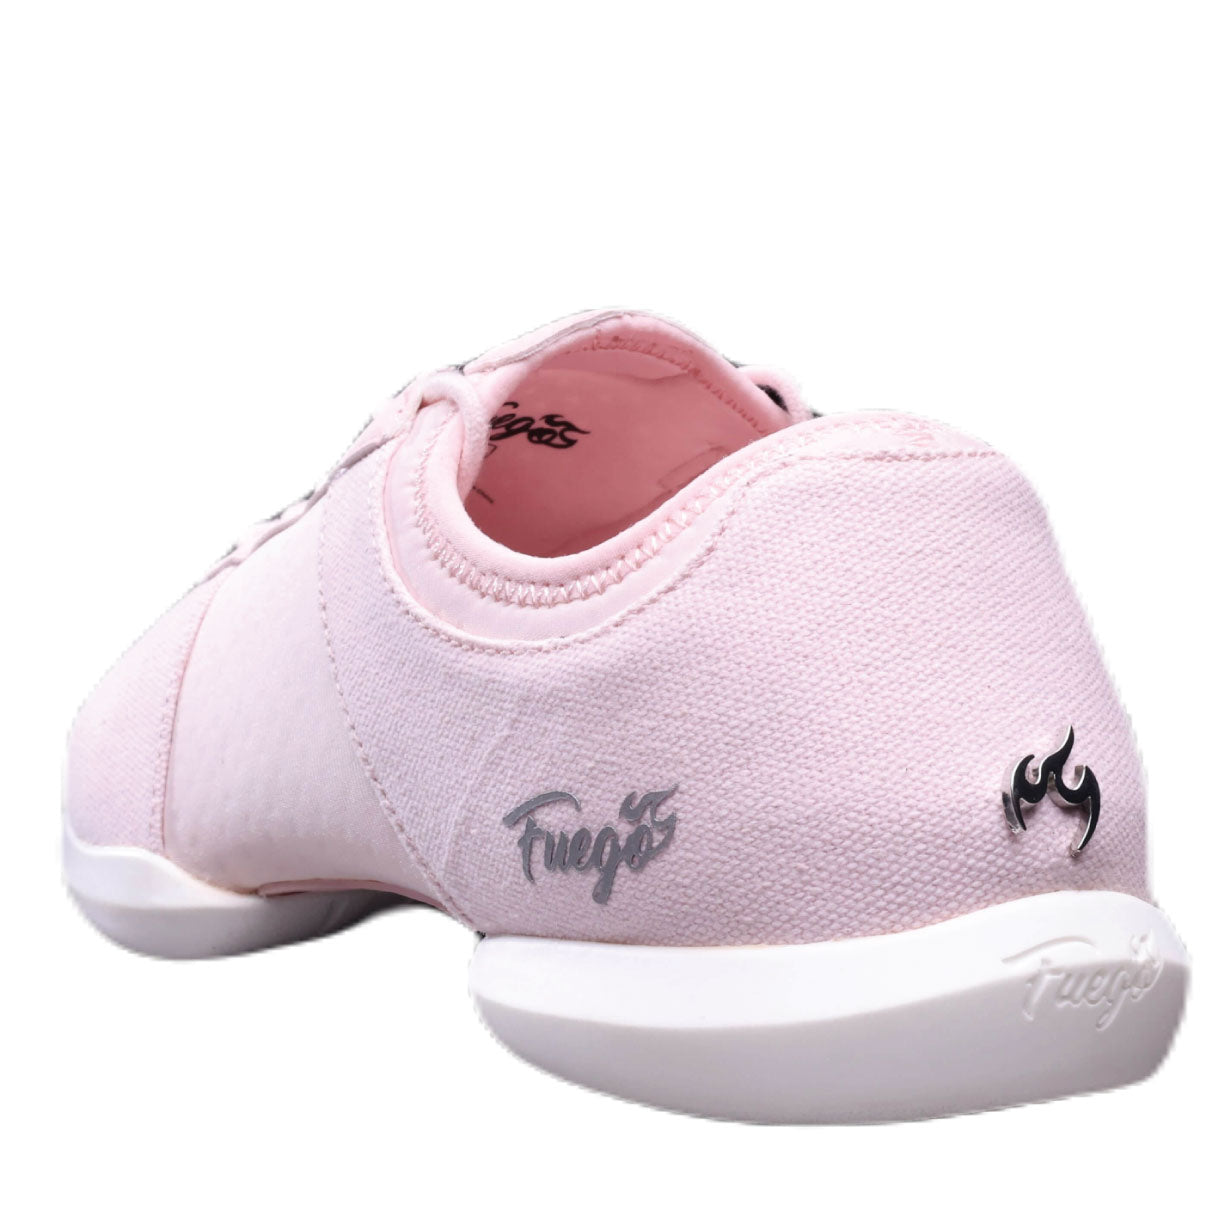 Fuego Dance Sneakers in Pink mit Split Sole